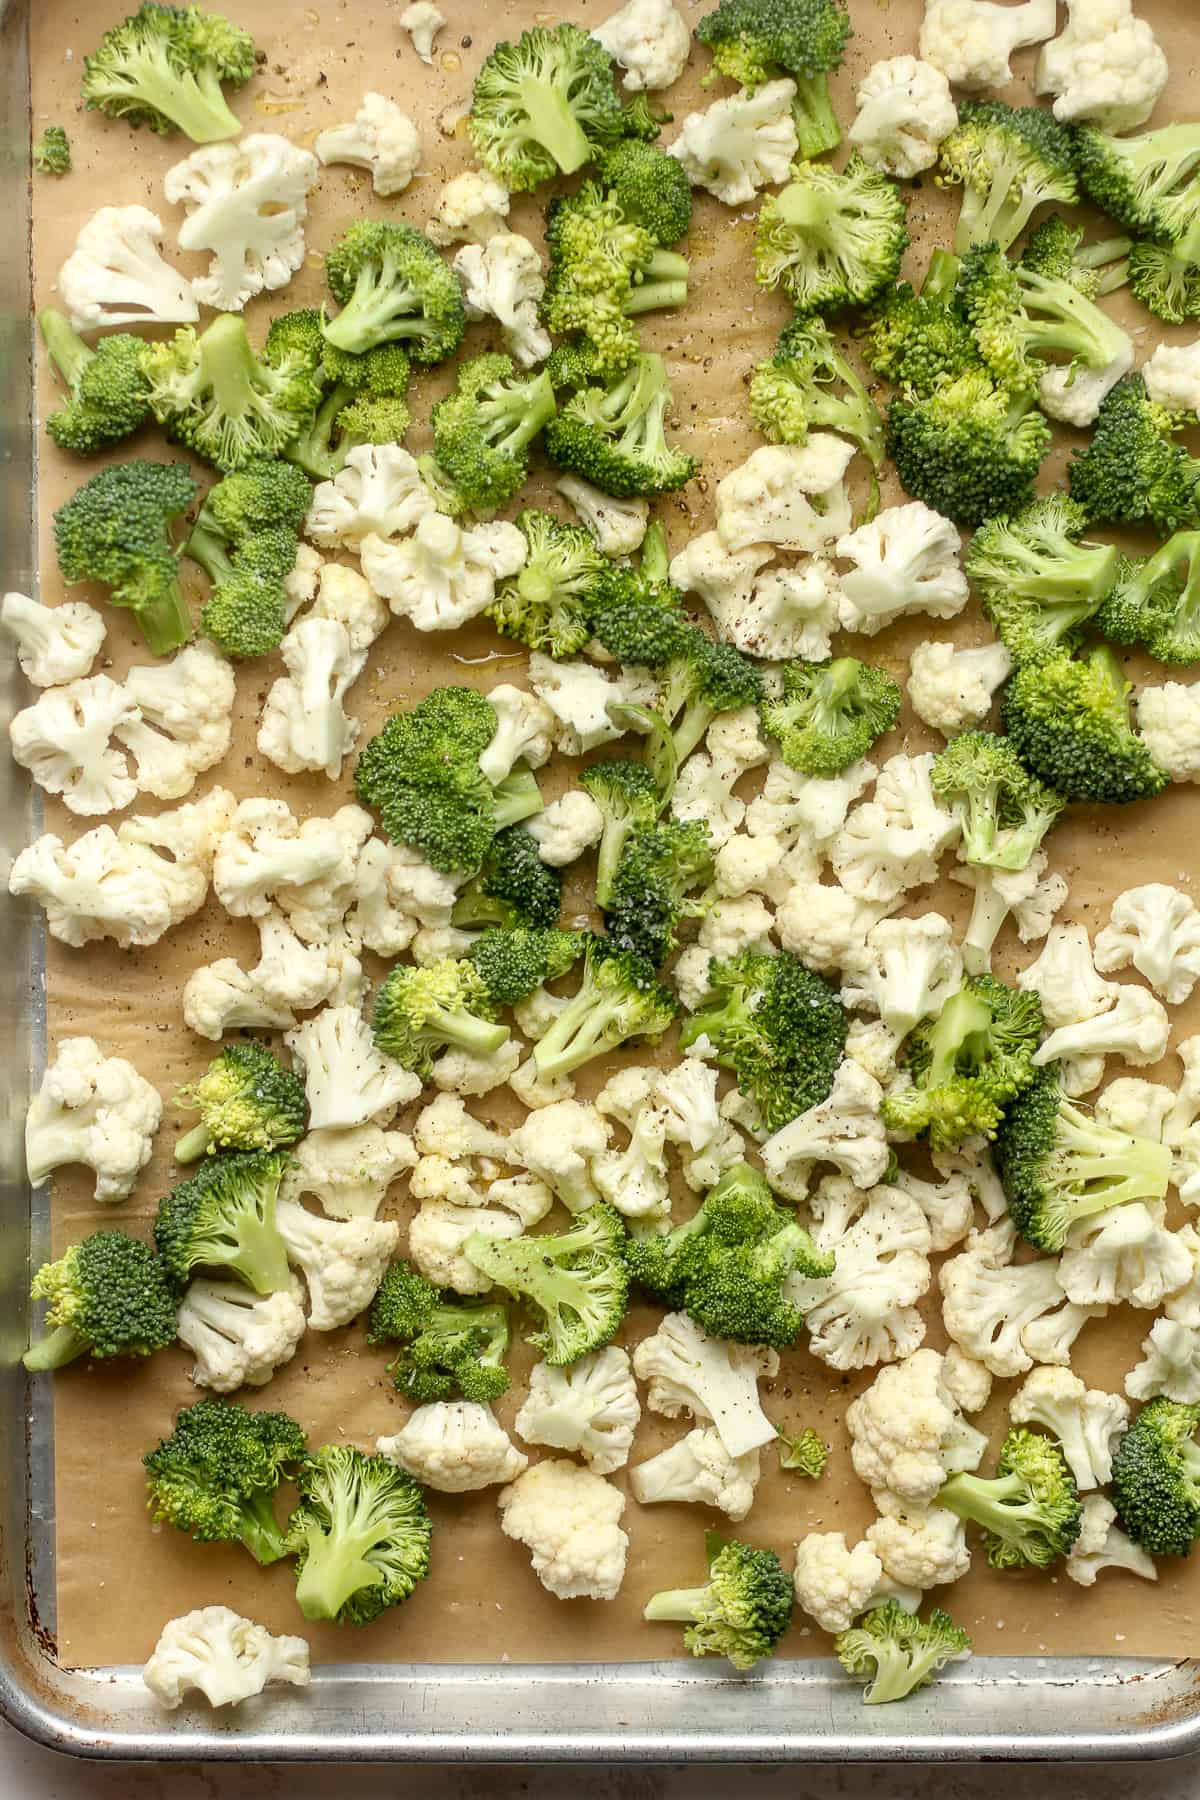 The raw broccoli and cauliflower on a sheet pan.